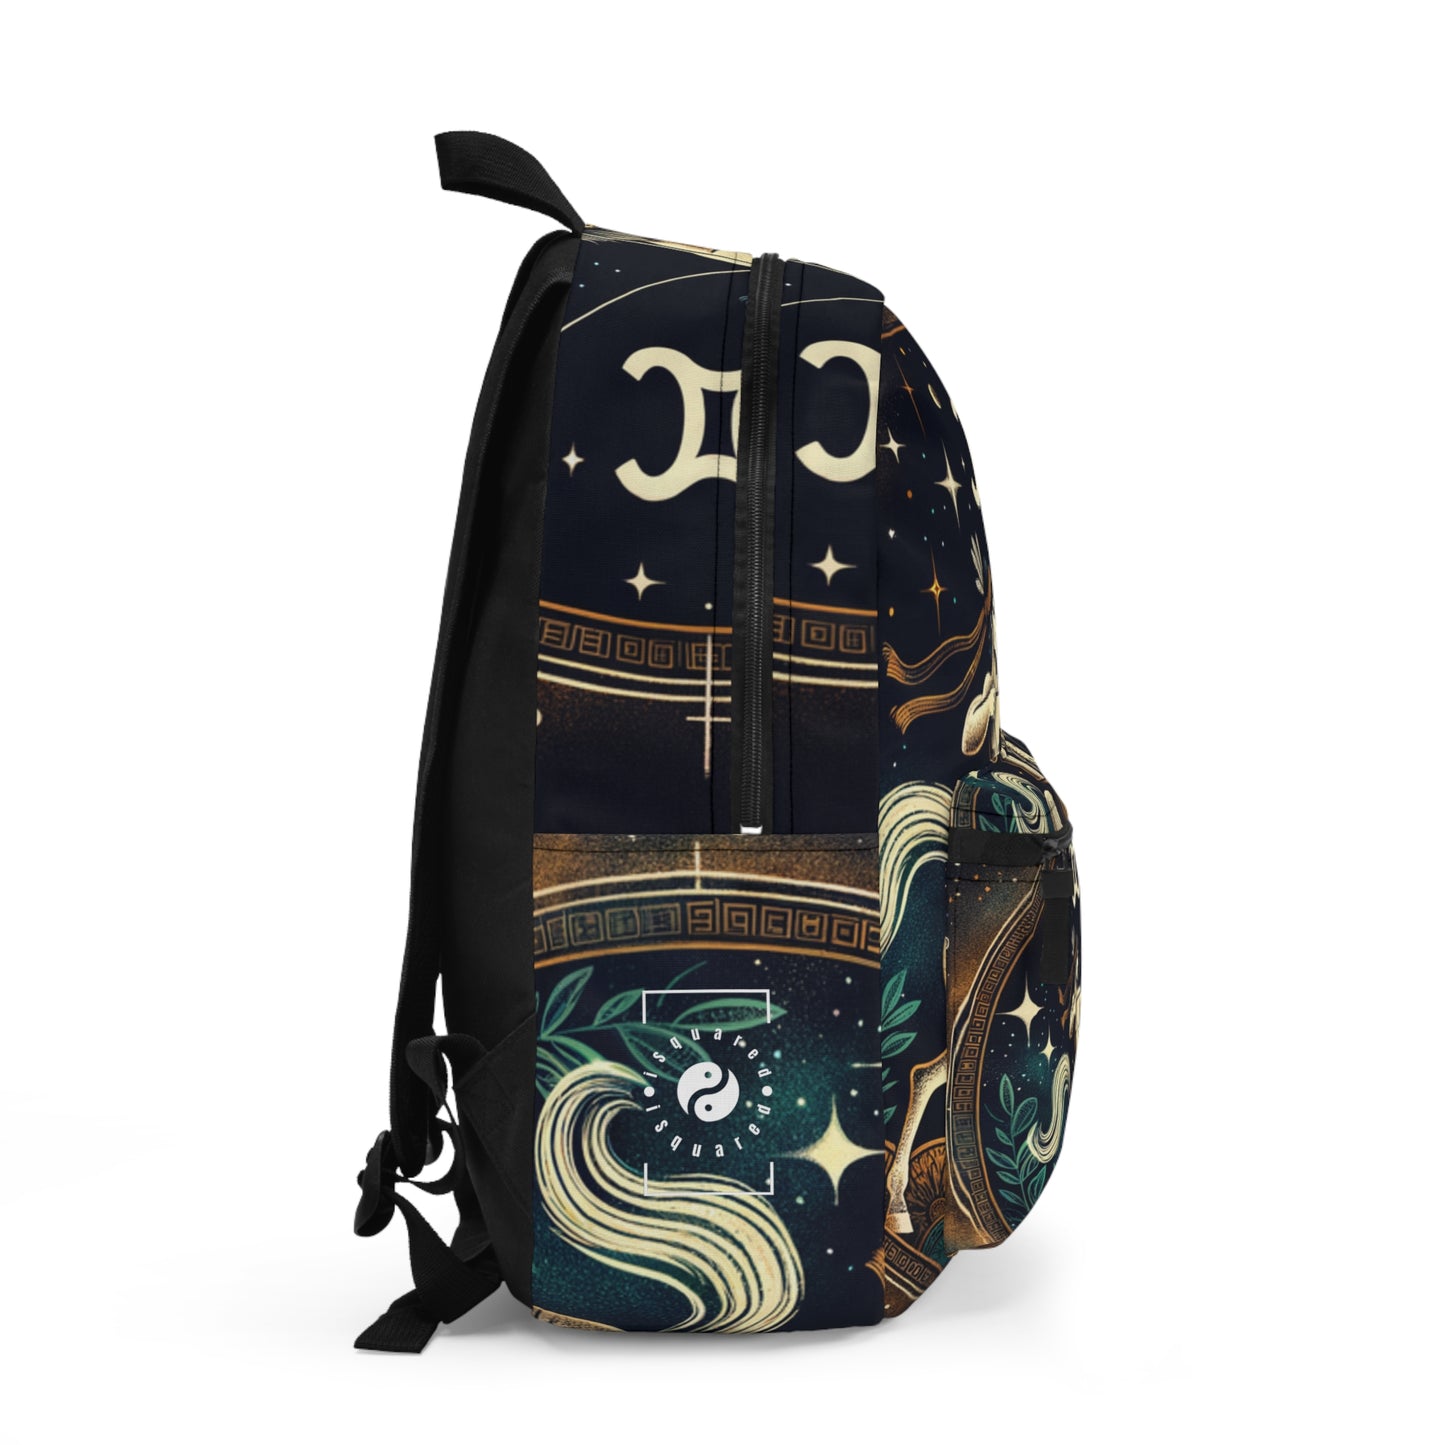 Sagittarius Emblem - Backpack